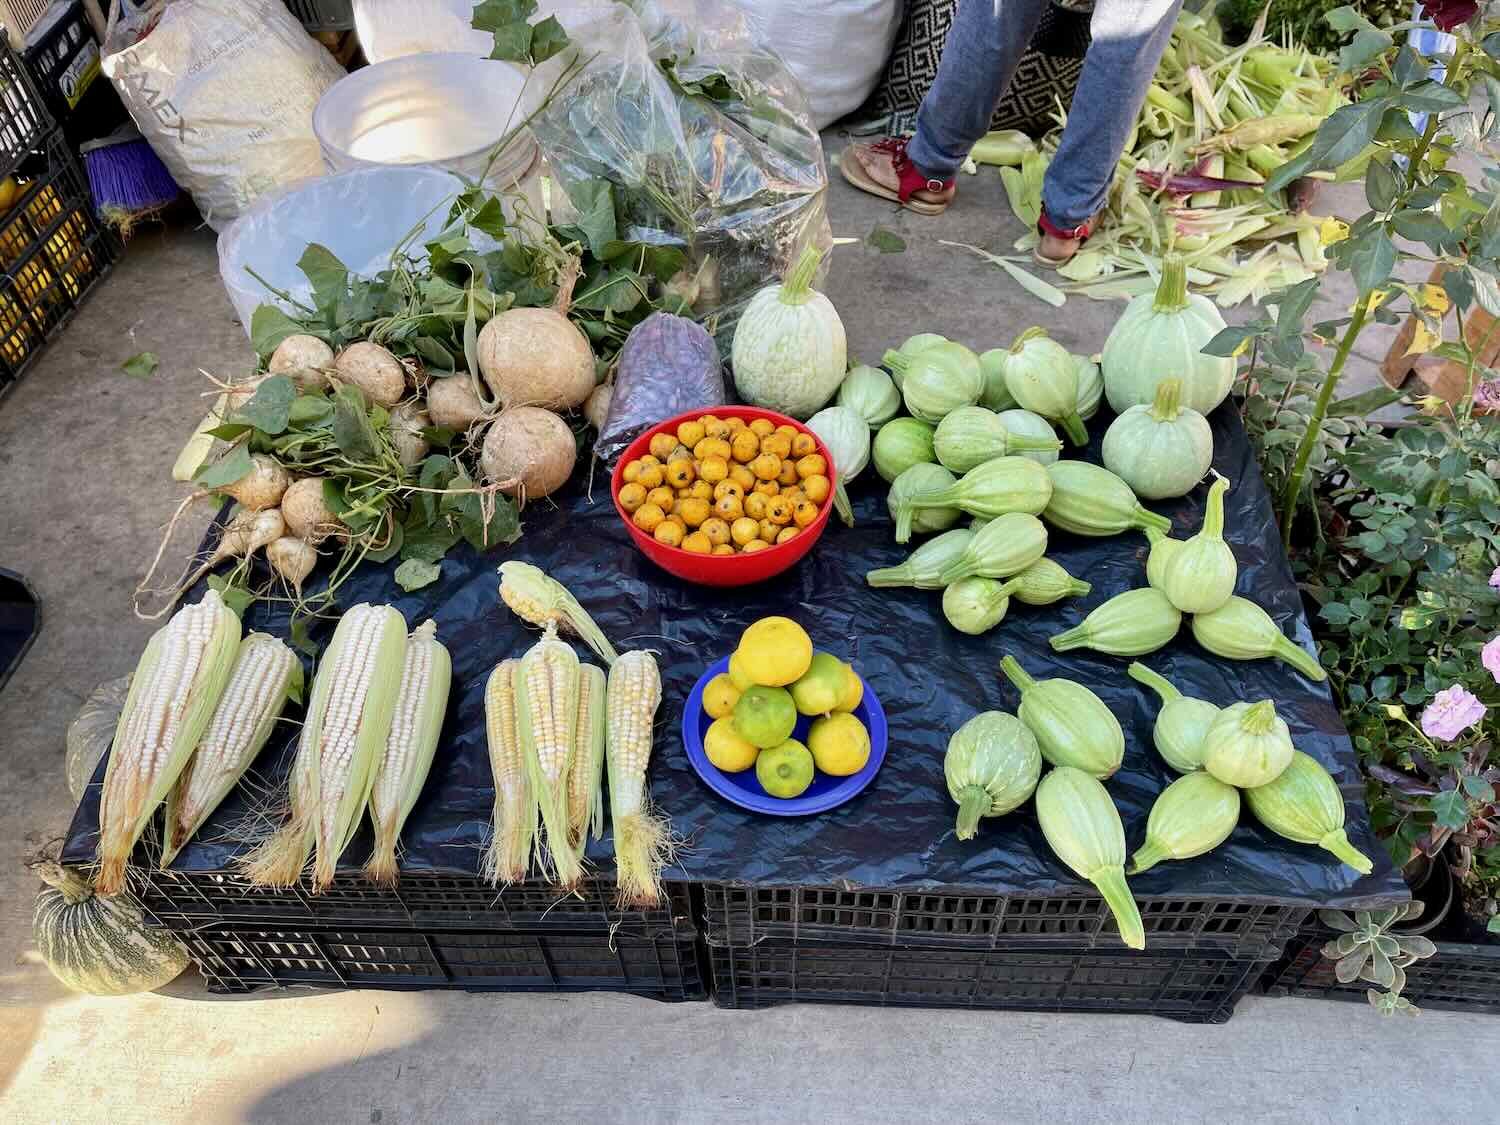 A tidy display of veggies